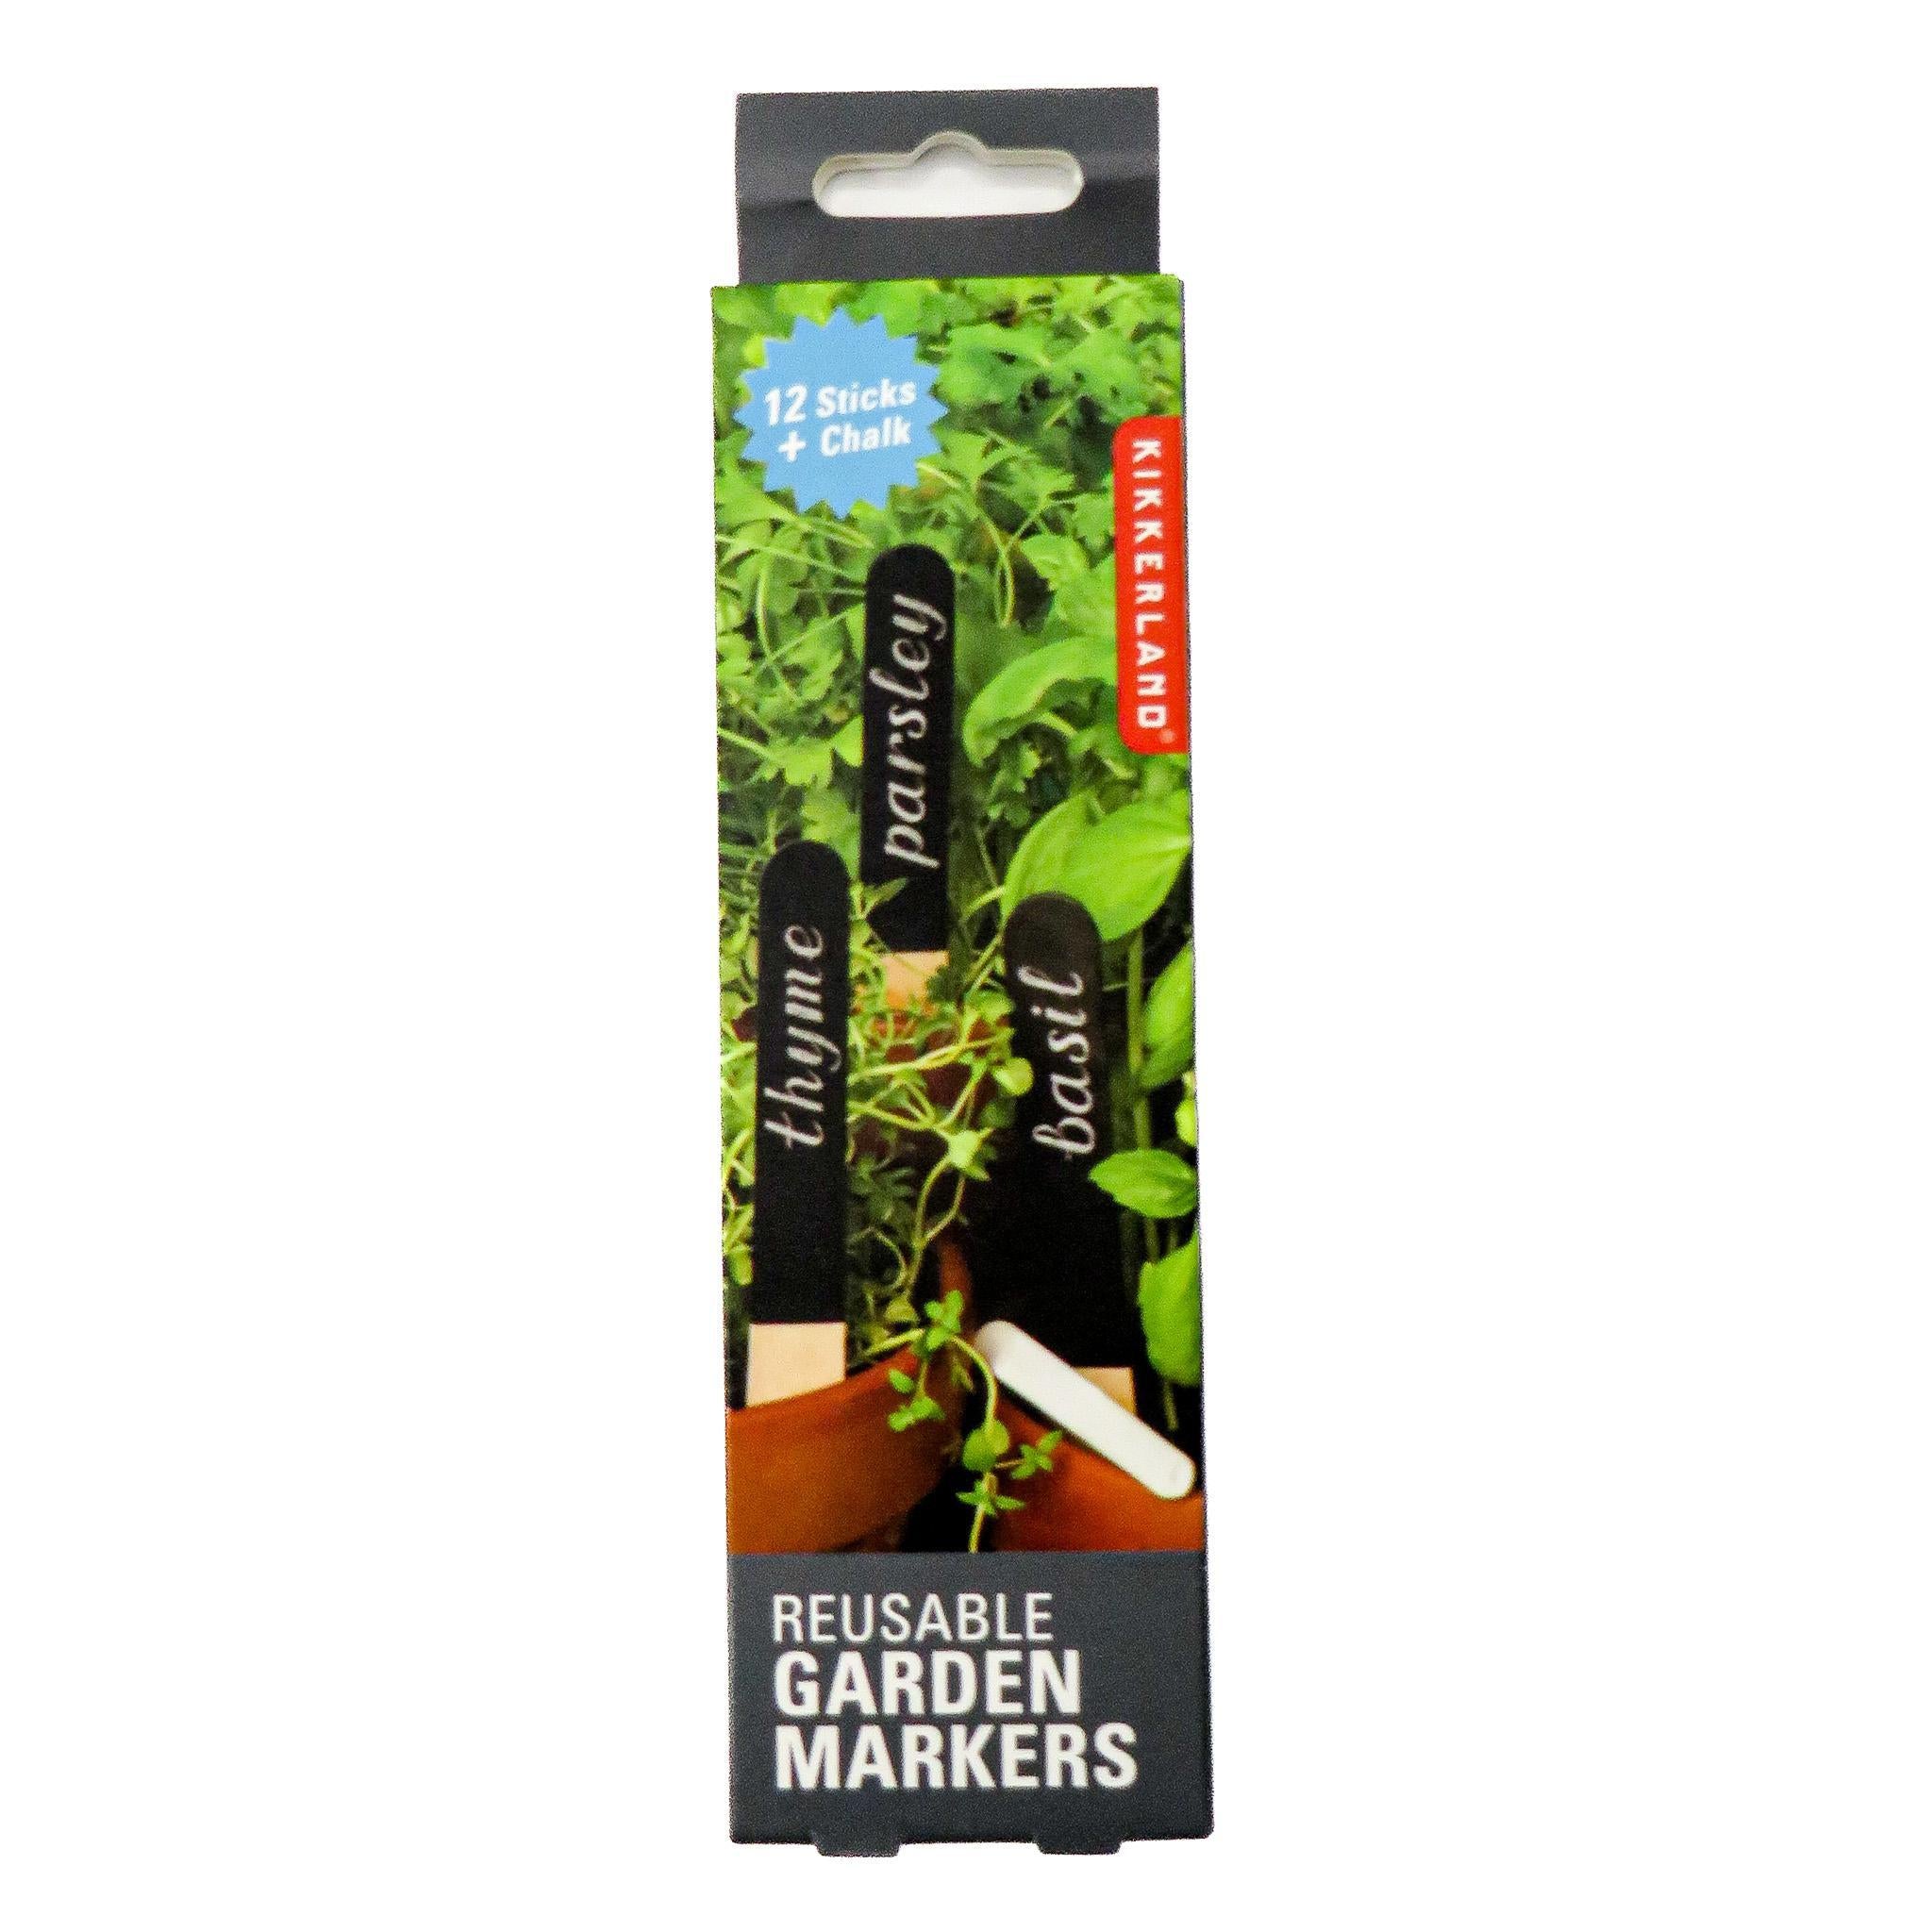 Reusable Garden Markers